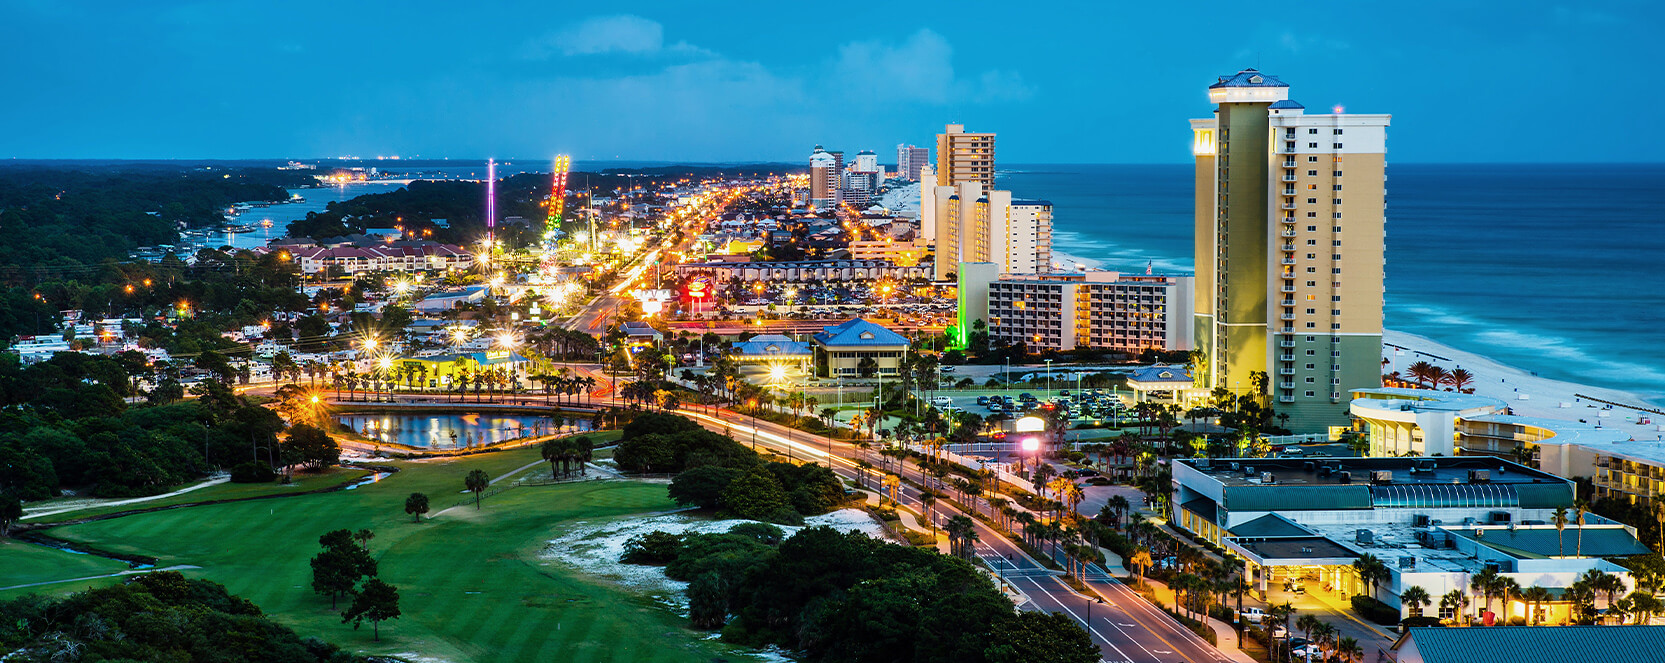 Result Driven Digital Marketing for Panama City Beach, FL Businesses